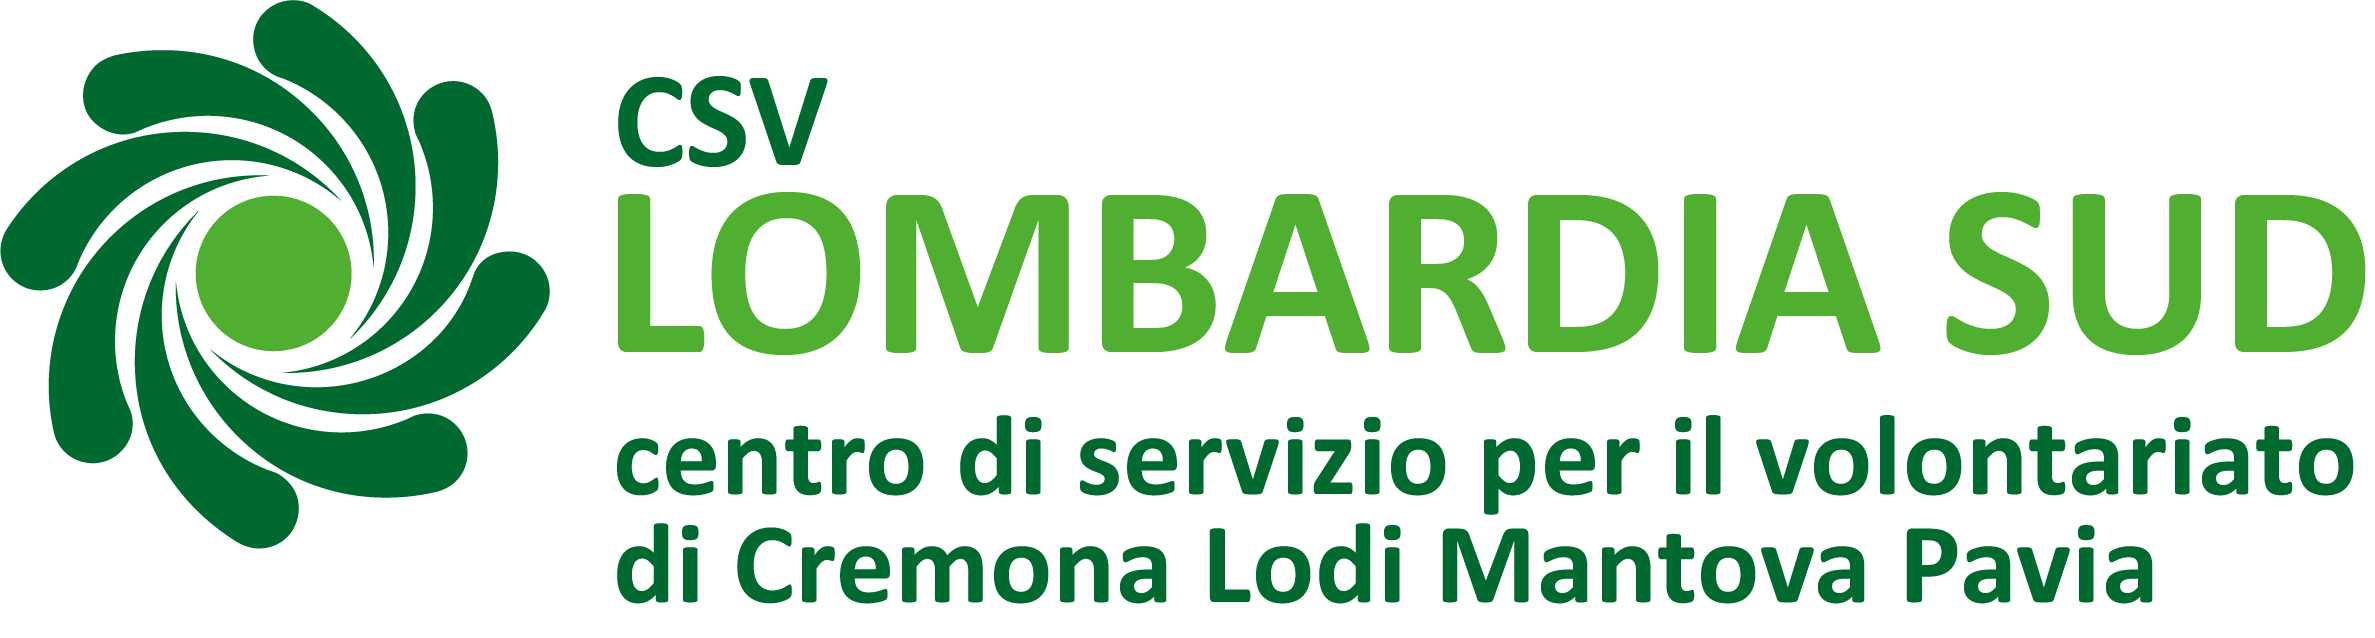 CSV Lombardia sud